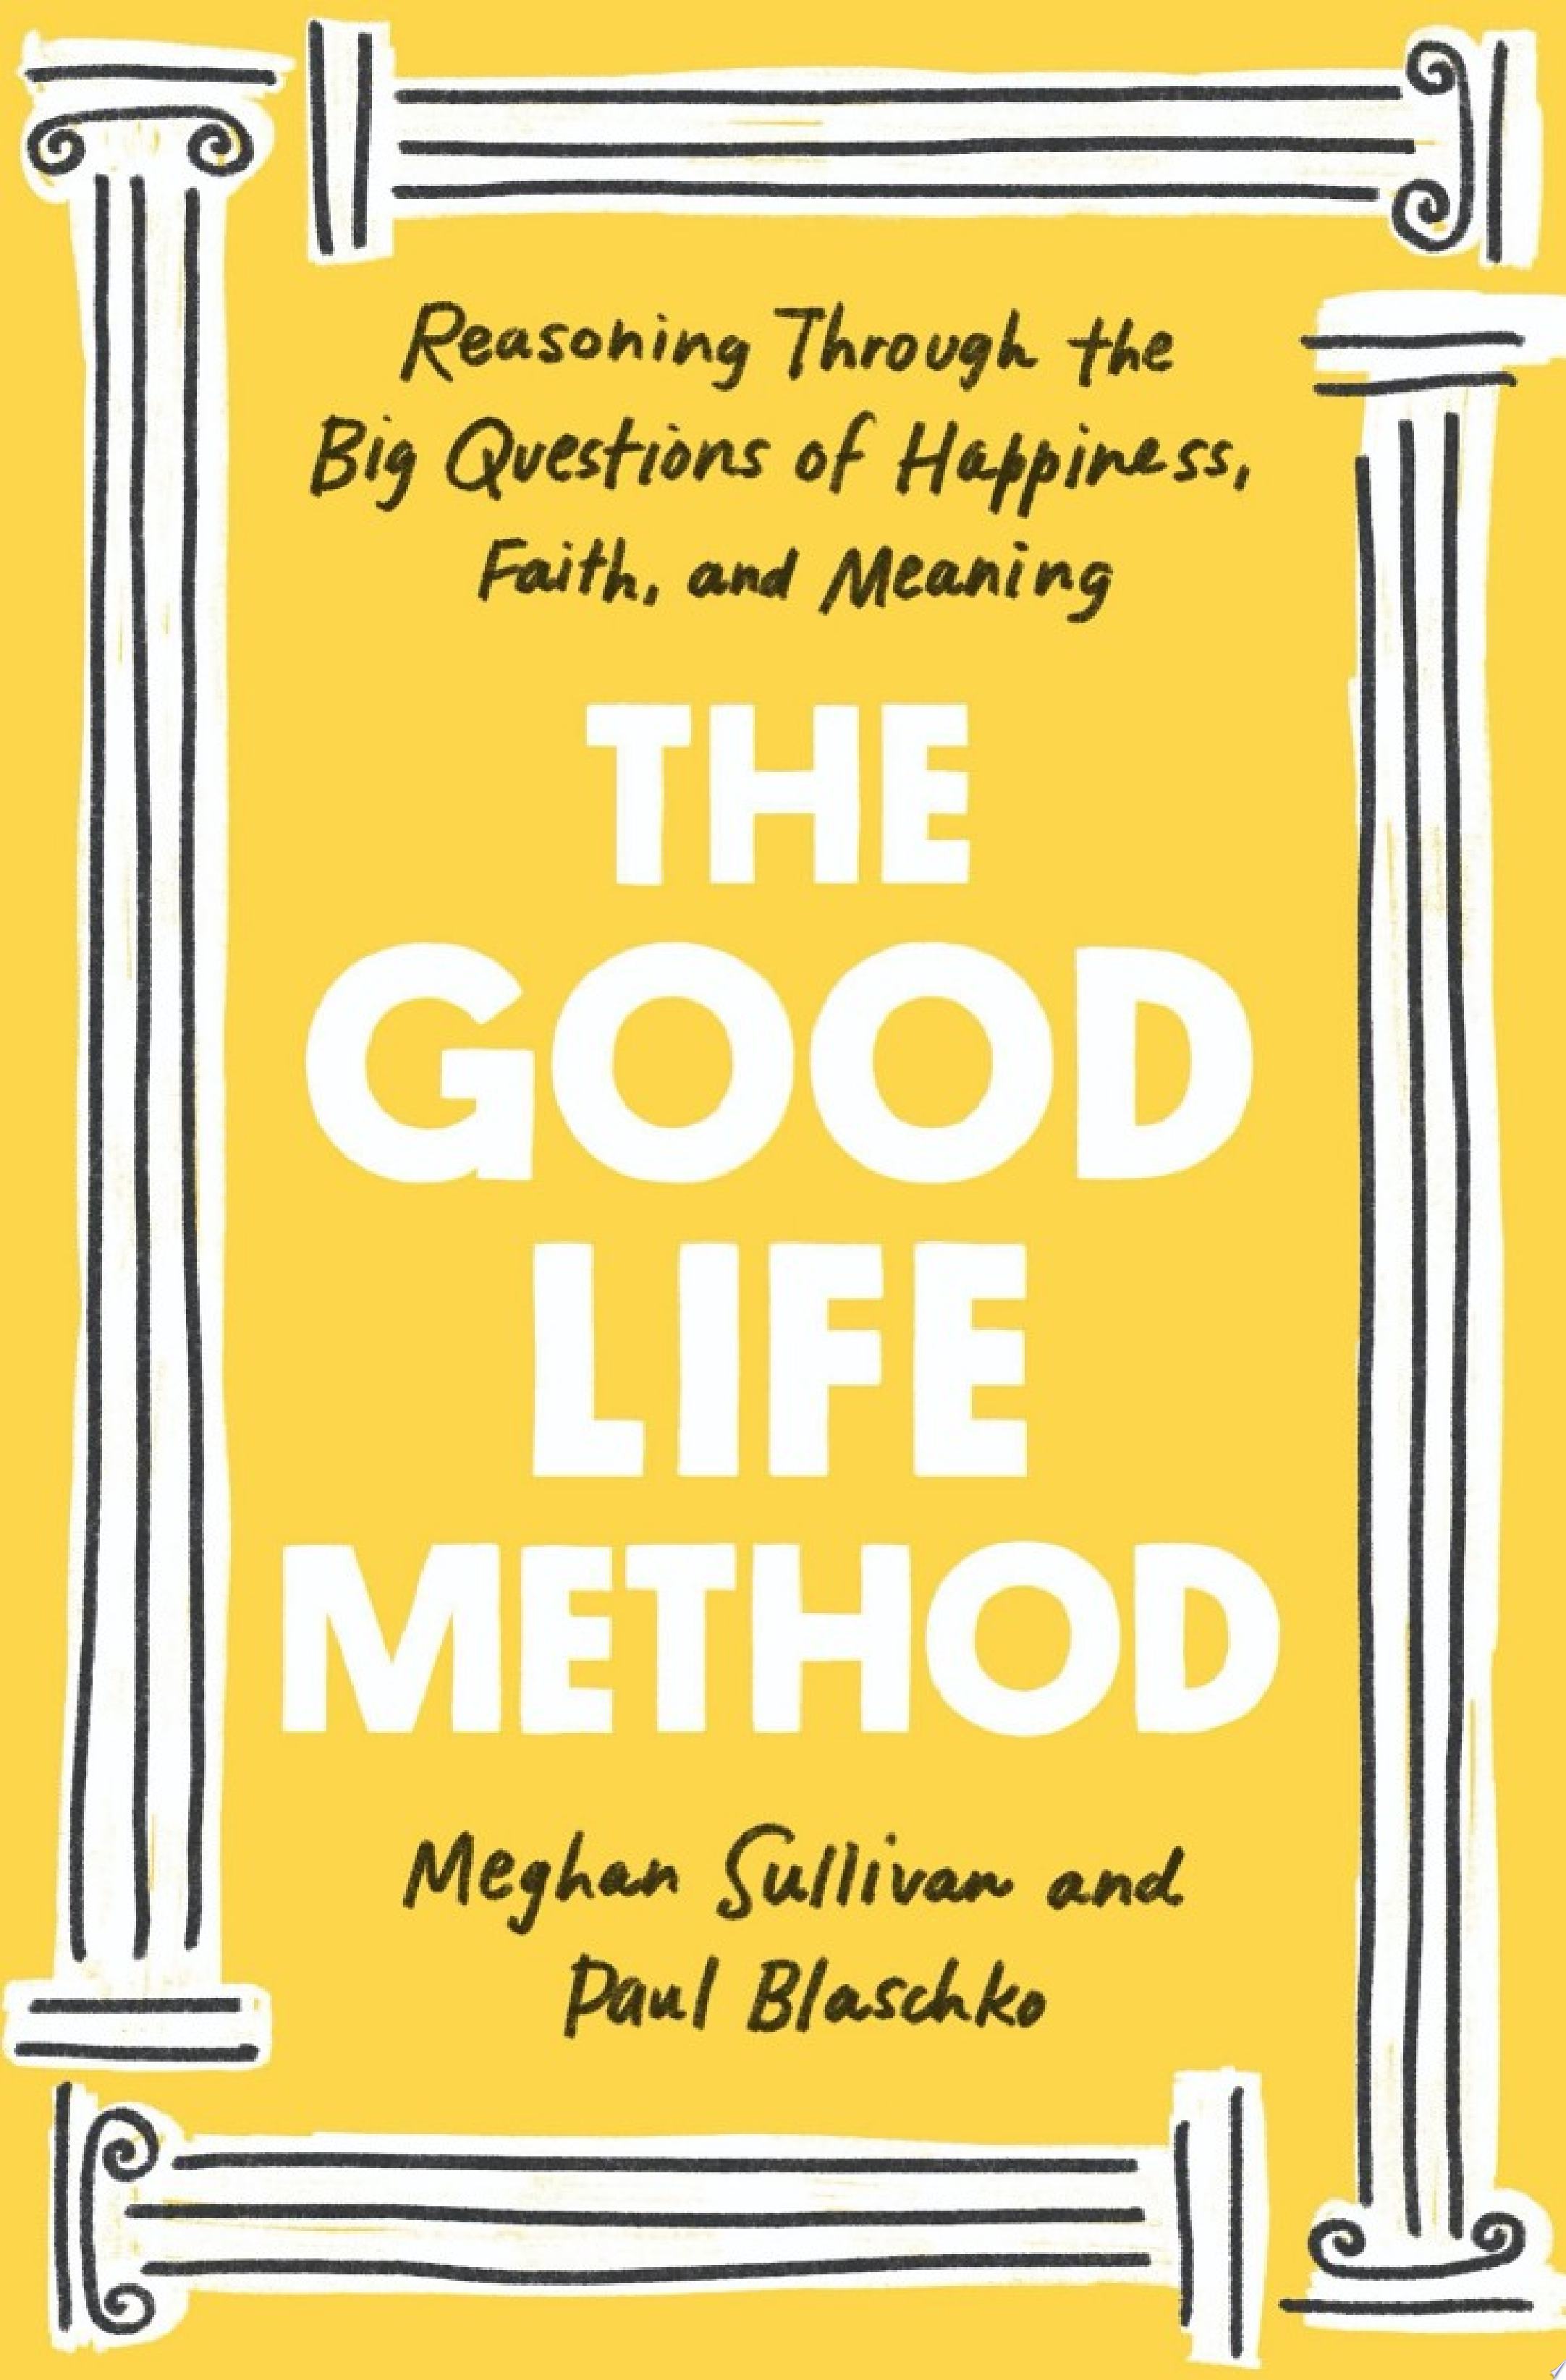 Image for "The Good Life Method"